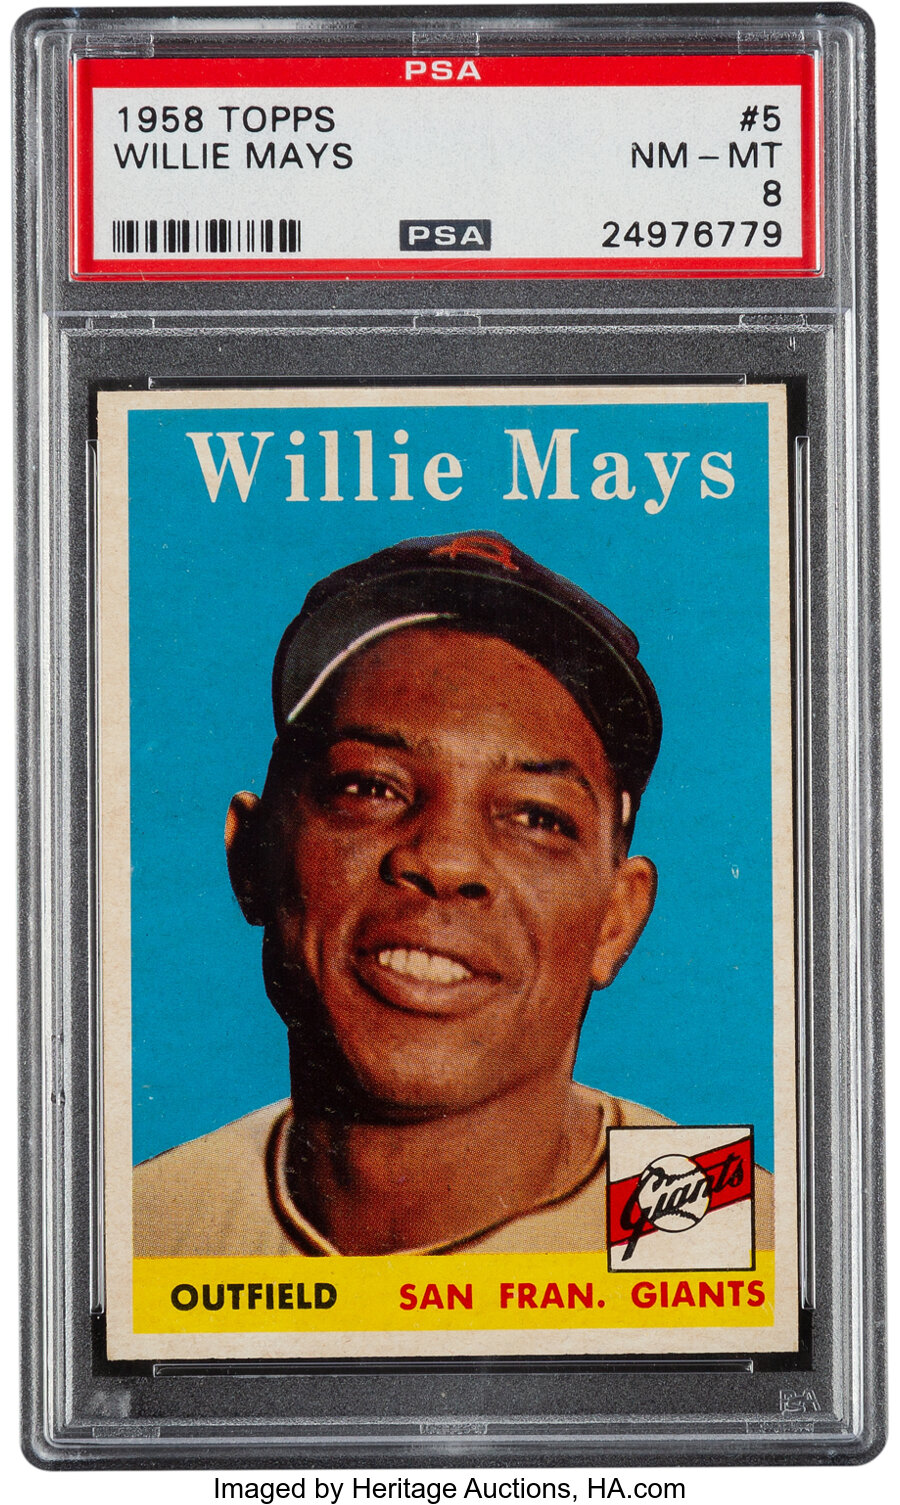 1958 Topps Willie Mays #5 PSA NM-MT 8